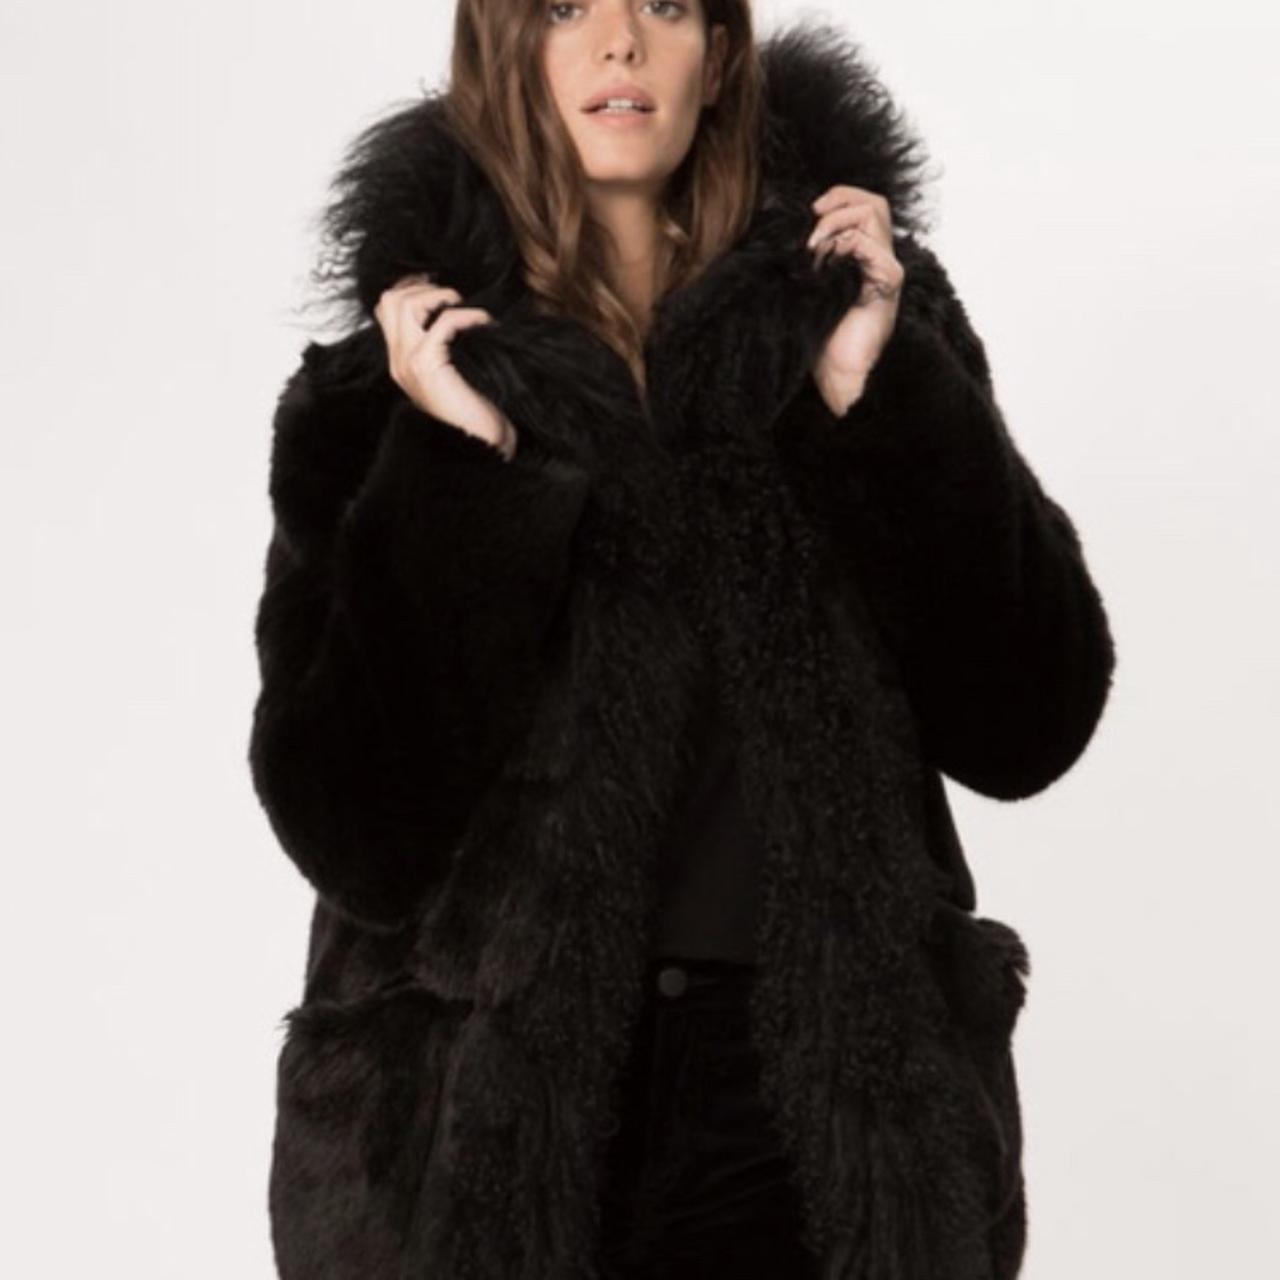 Maje Black Faux Fur Coat with shearling lining RRP... - Depop